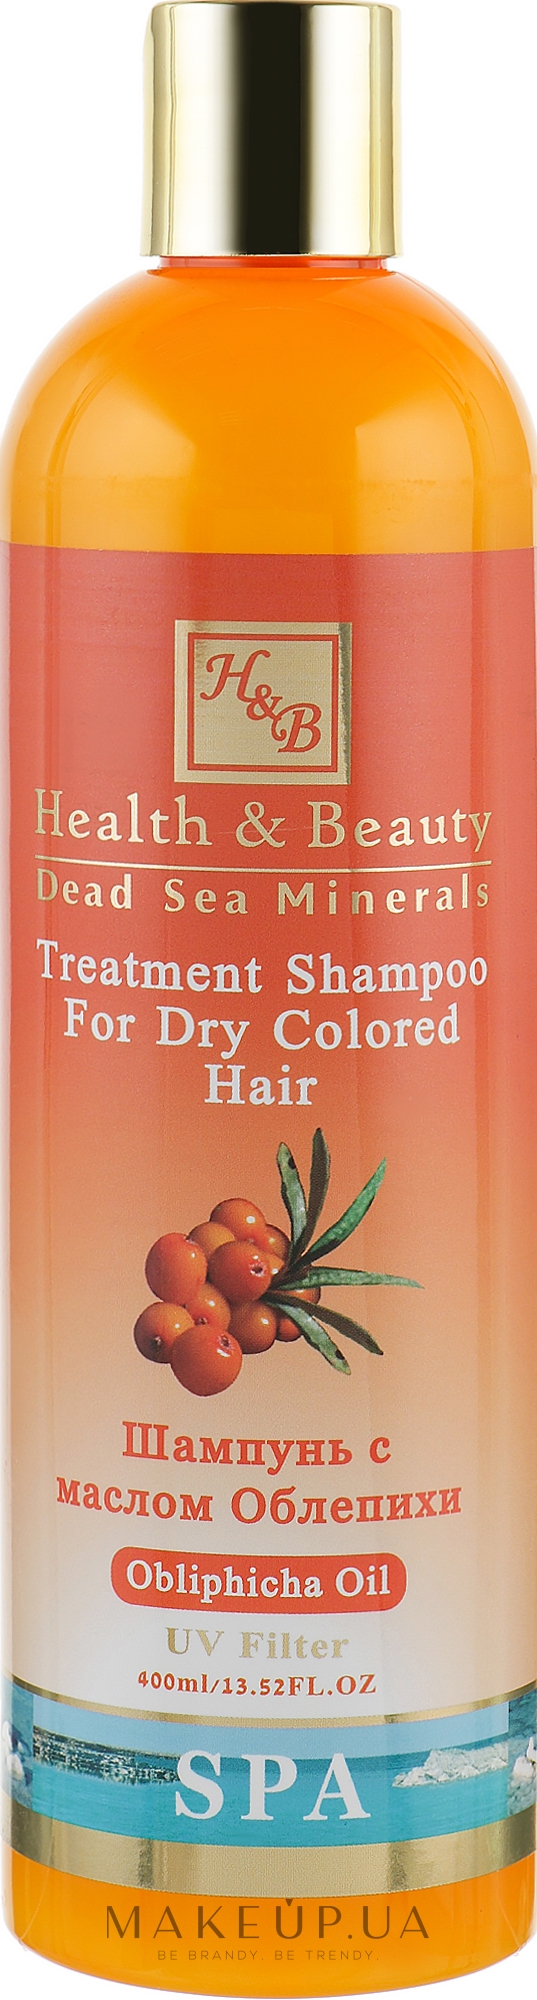 Шампунь для сухого і фарбованого волосся з маслом обліпихи - Health And Beauty Obliphicha Treatment Shampoo for Dry Colored Hair — фото 400ml